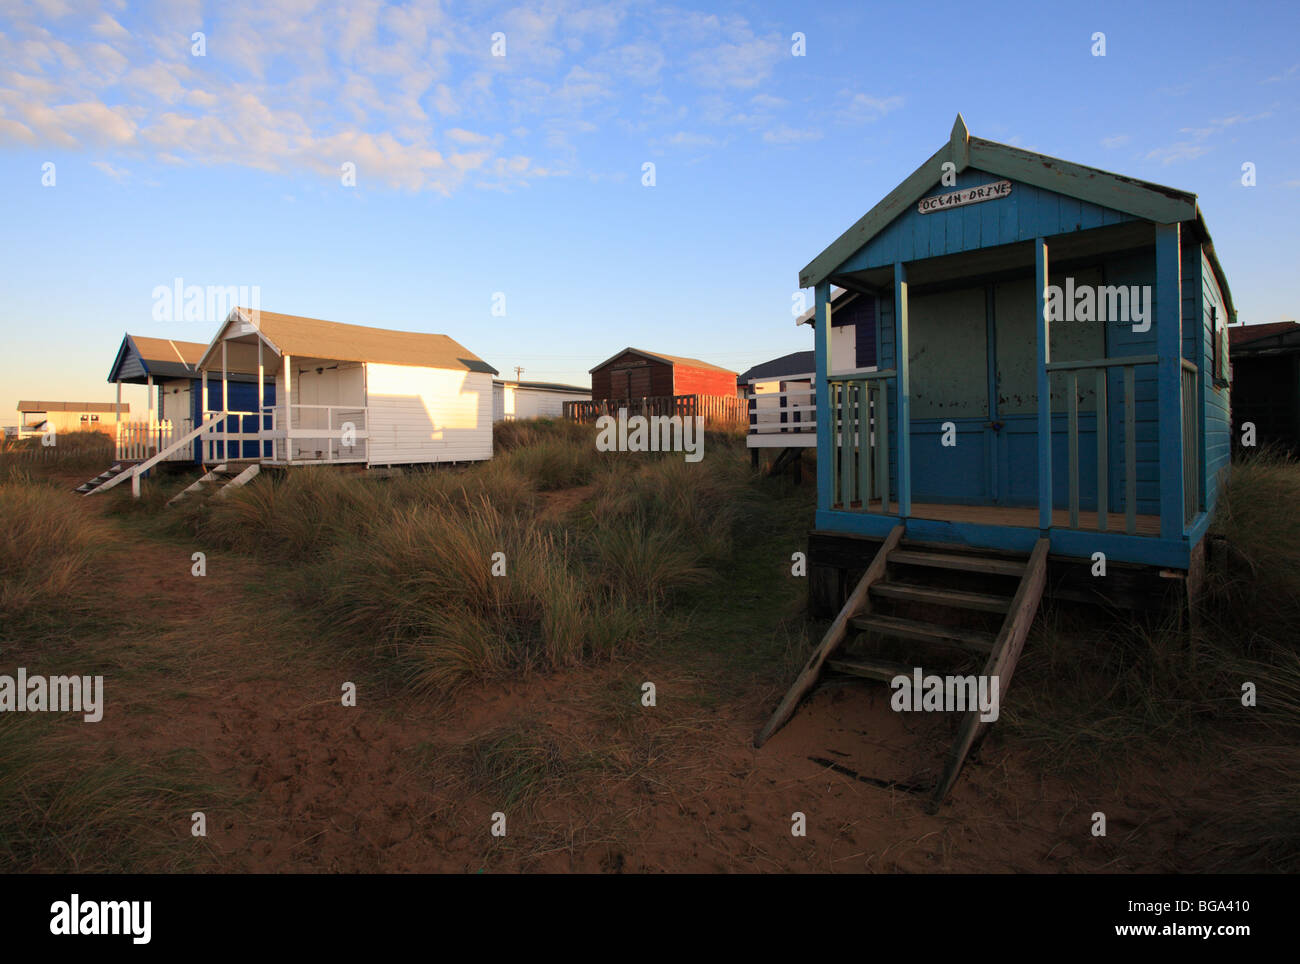 Beach huts at Old Hunstanton on the North Norfolk coast. Stock Photo